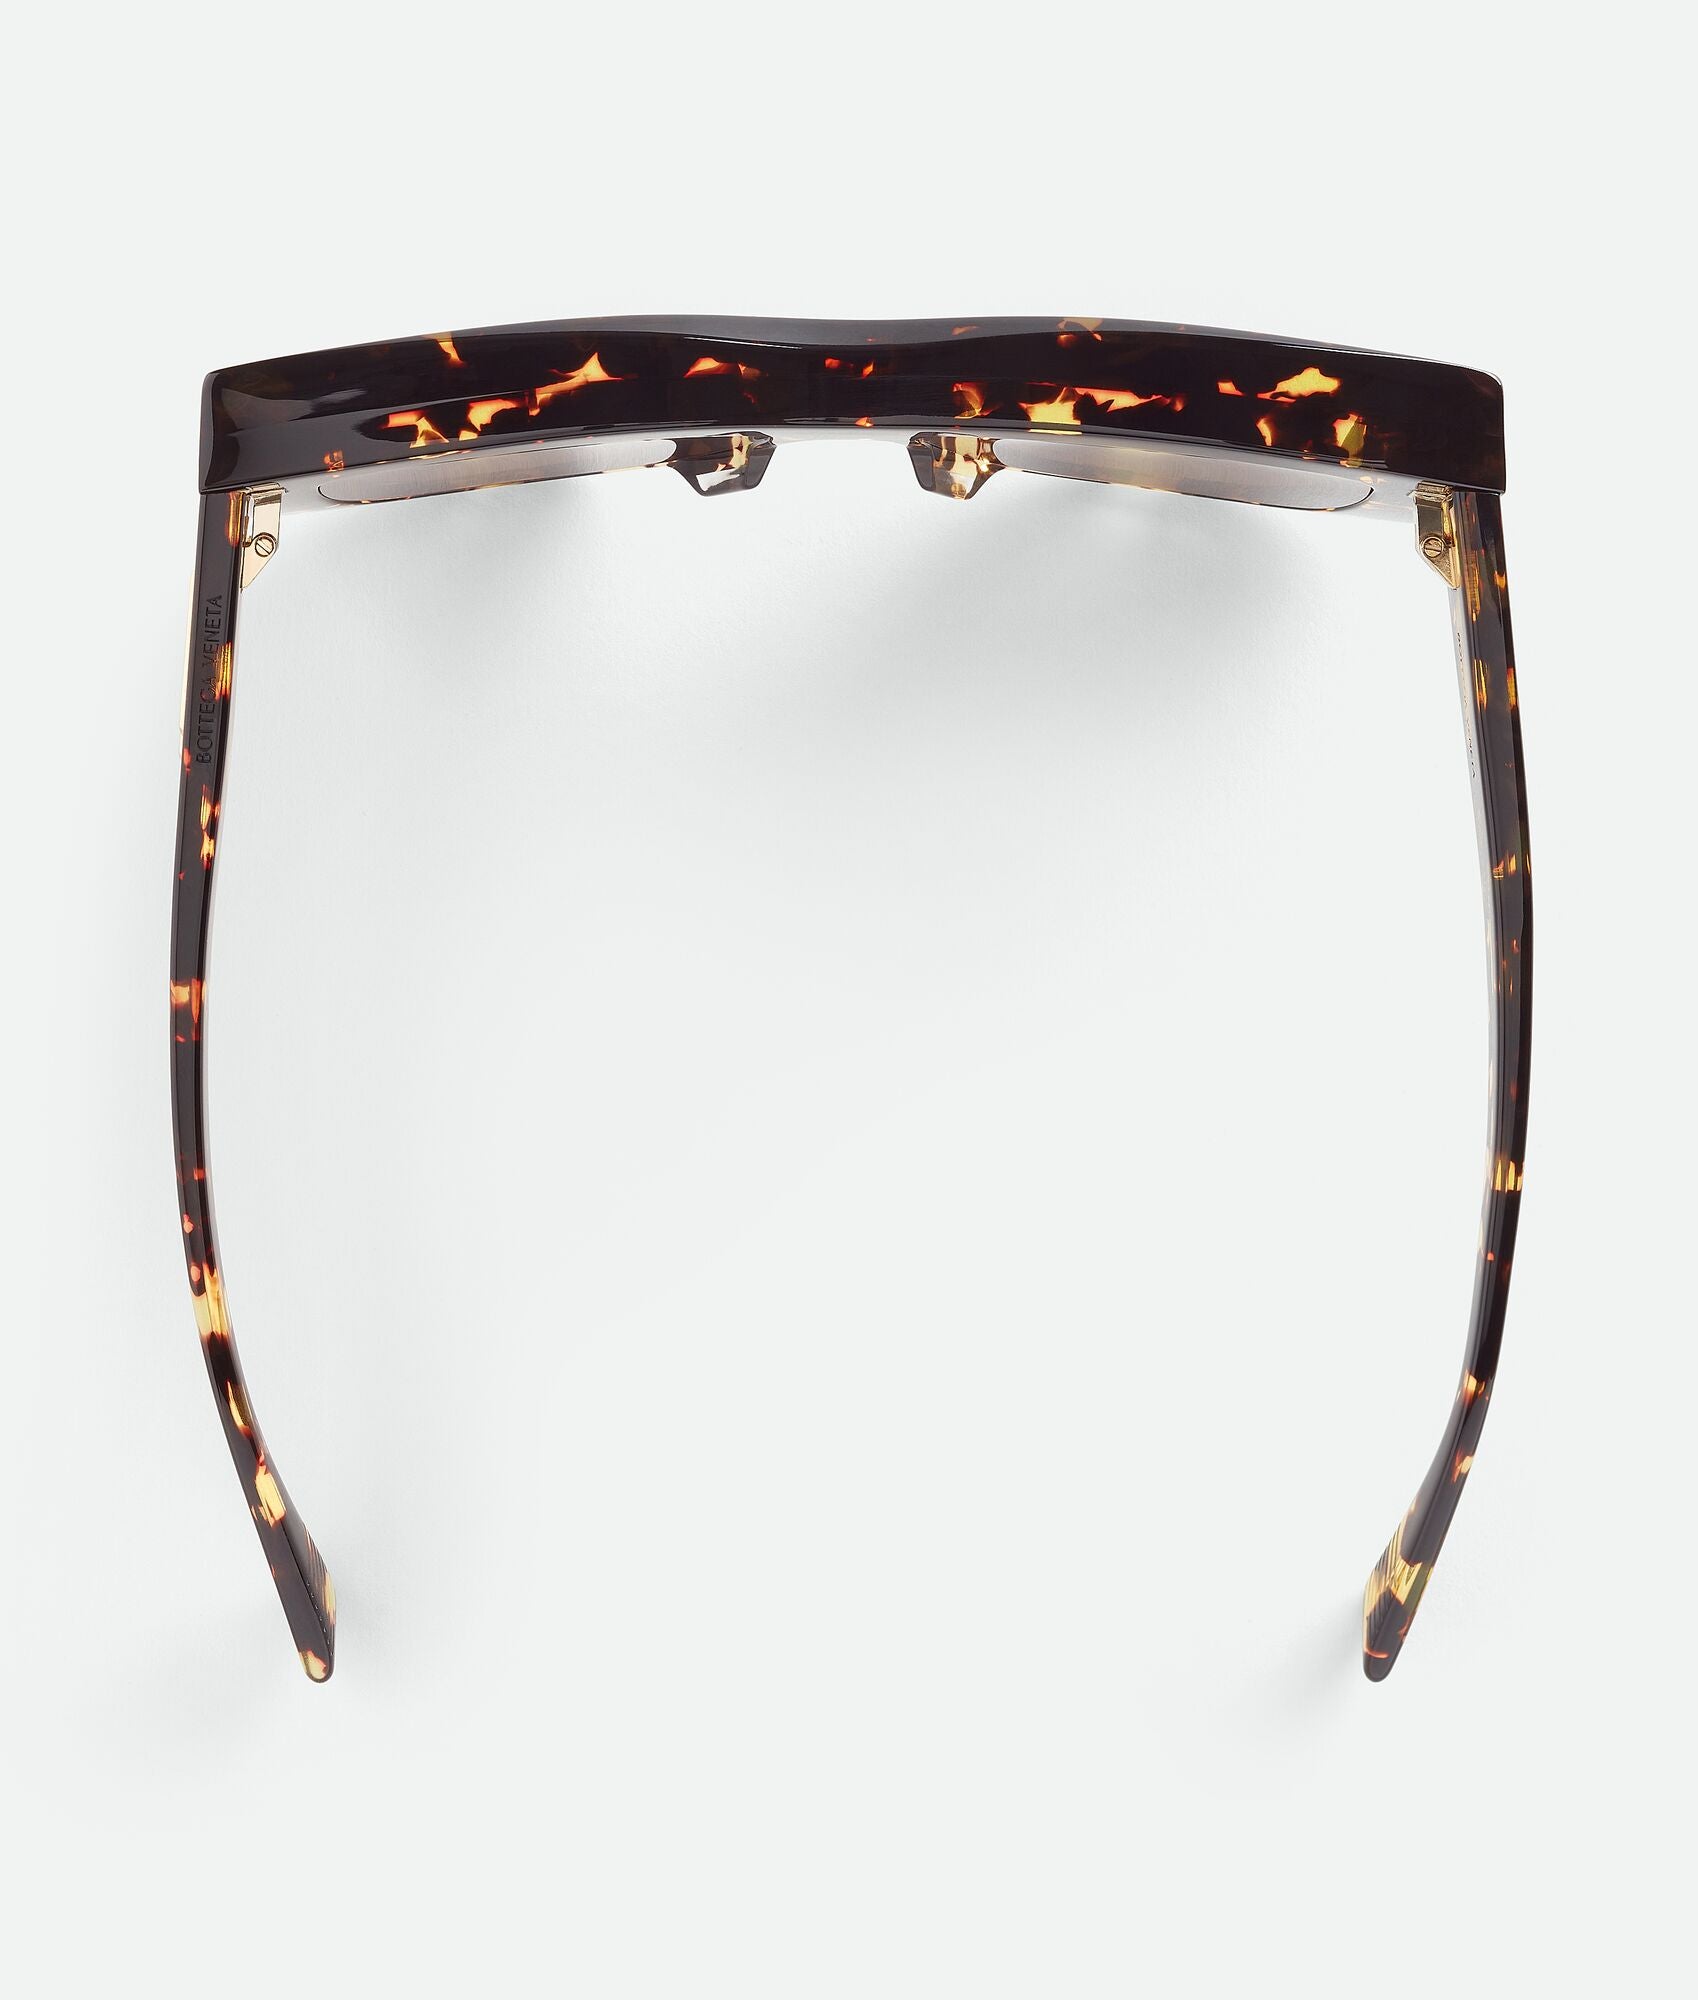 Bottega Veneta Visor Recycled Sunglasses in Havana available at The New Trend Australia.